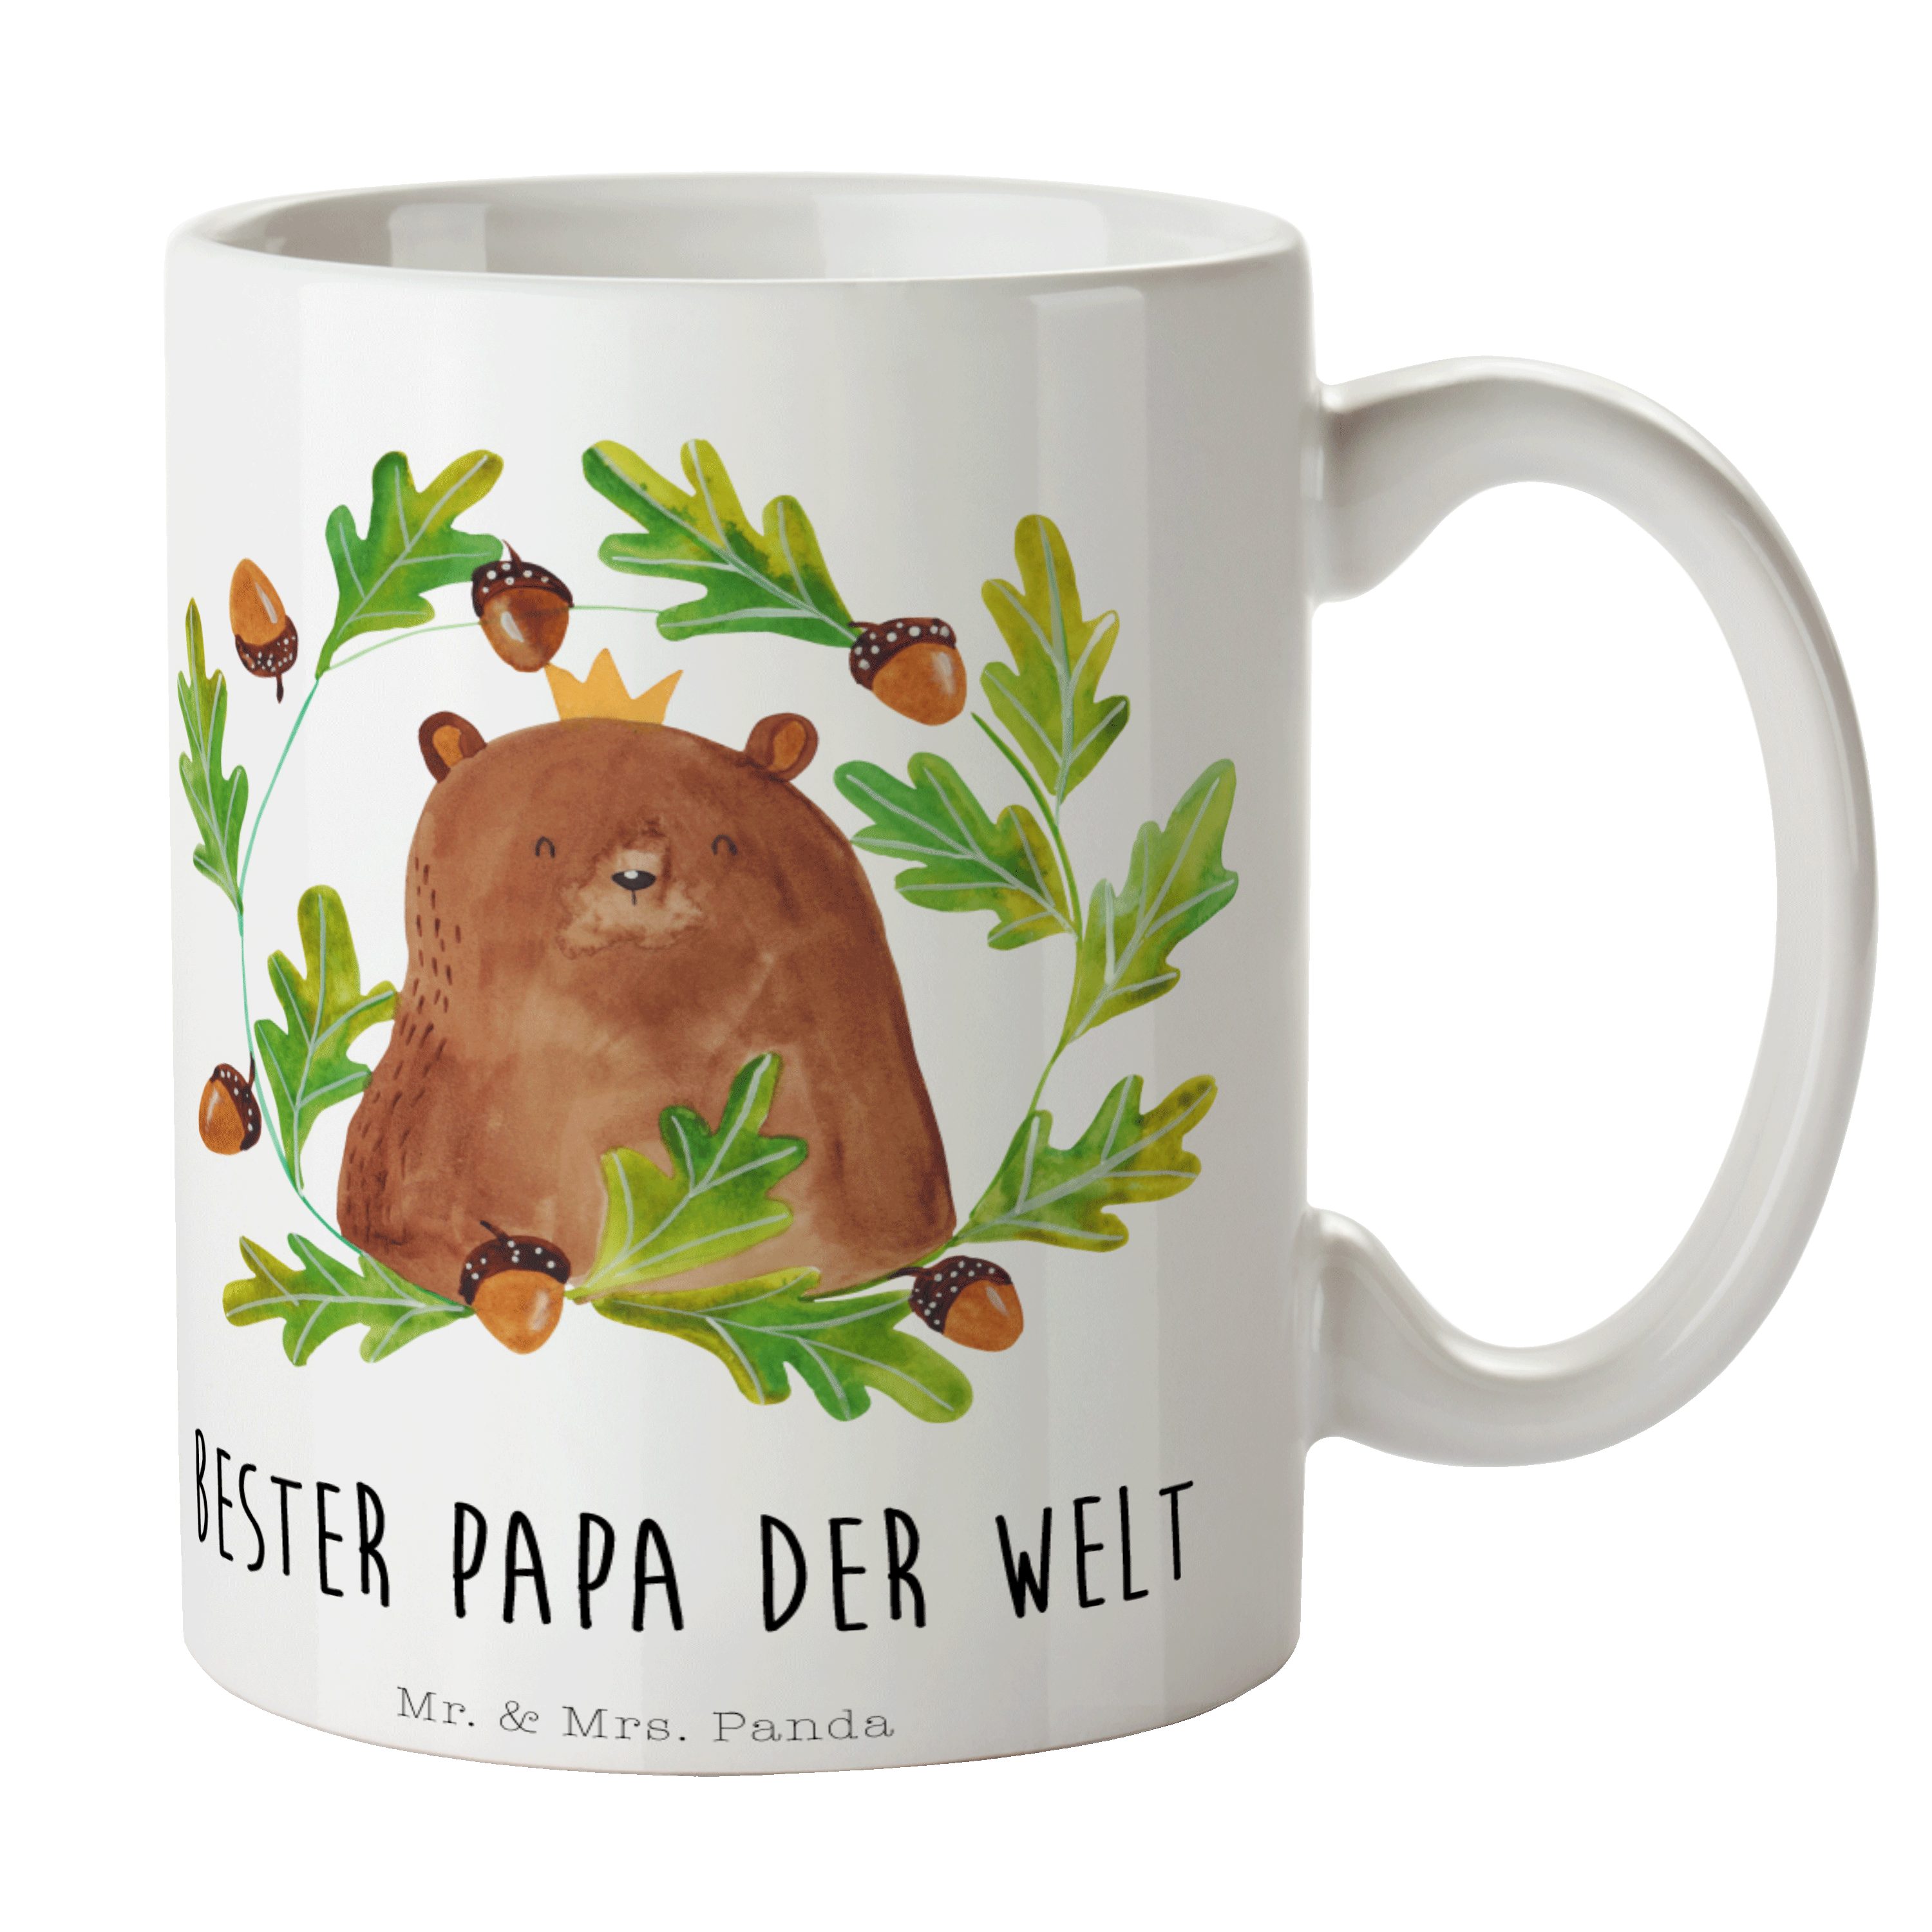 Mr. & Mrs. Panda Tasse Bär König - Weiß - Geschenk, Becher, Vatertag, Keramiktasse, Teddybär, Keramik